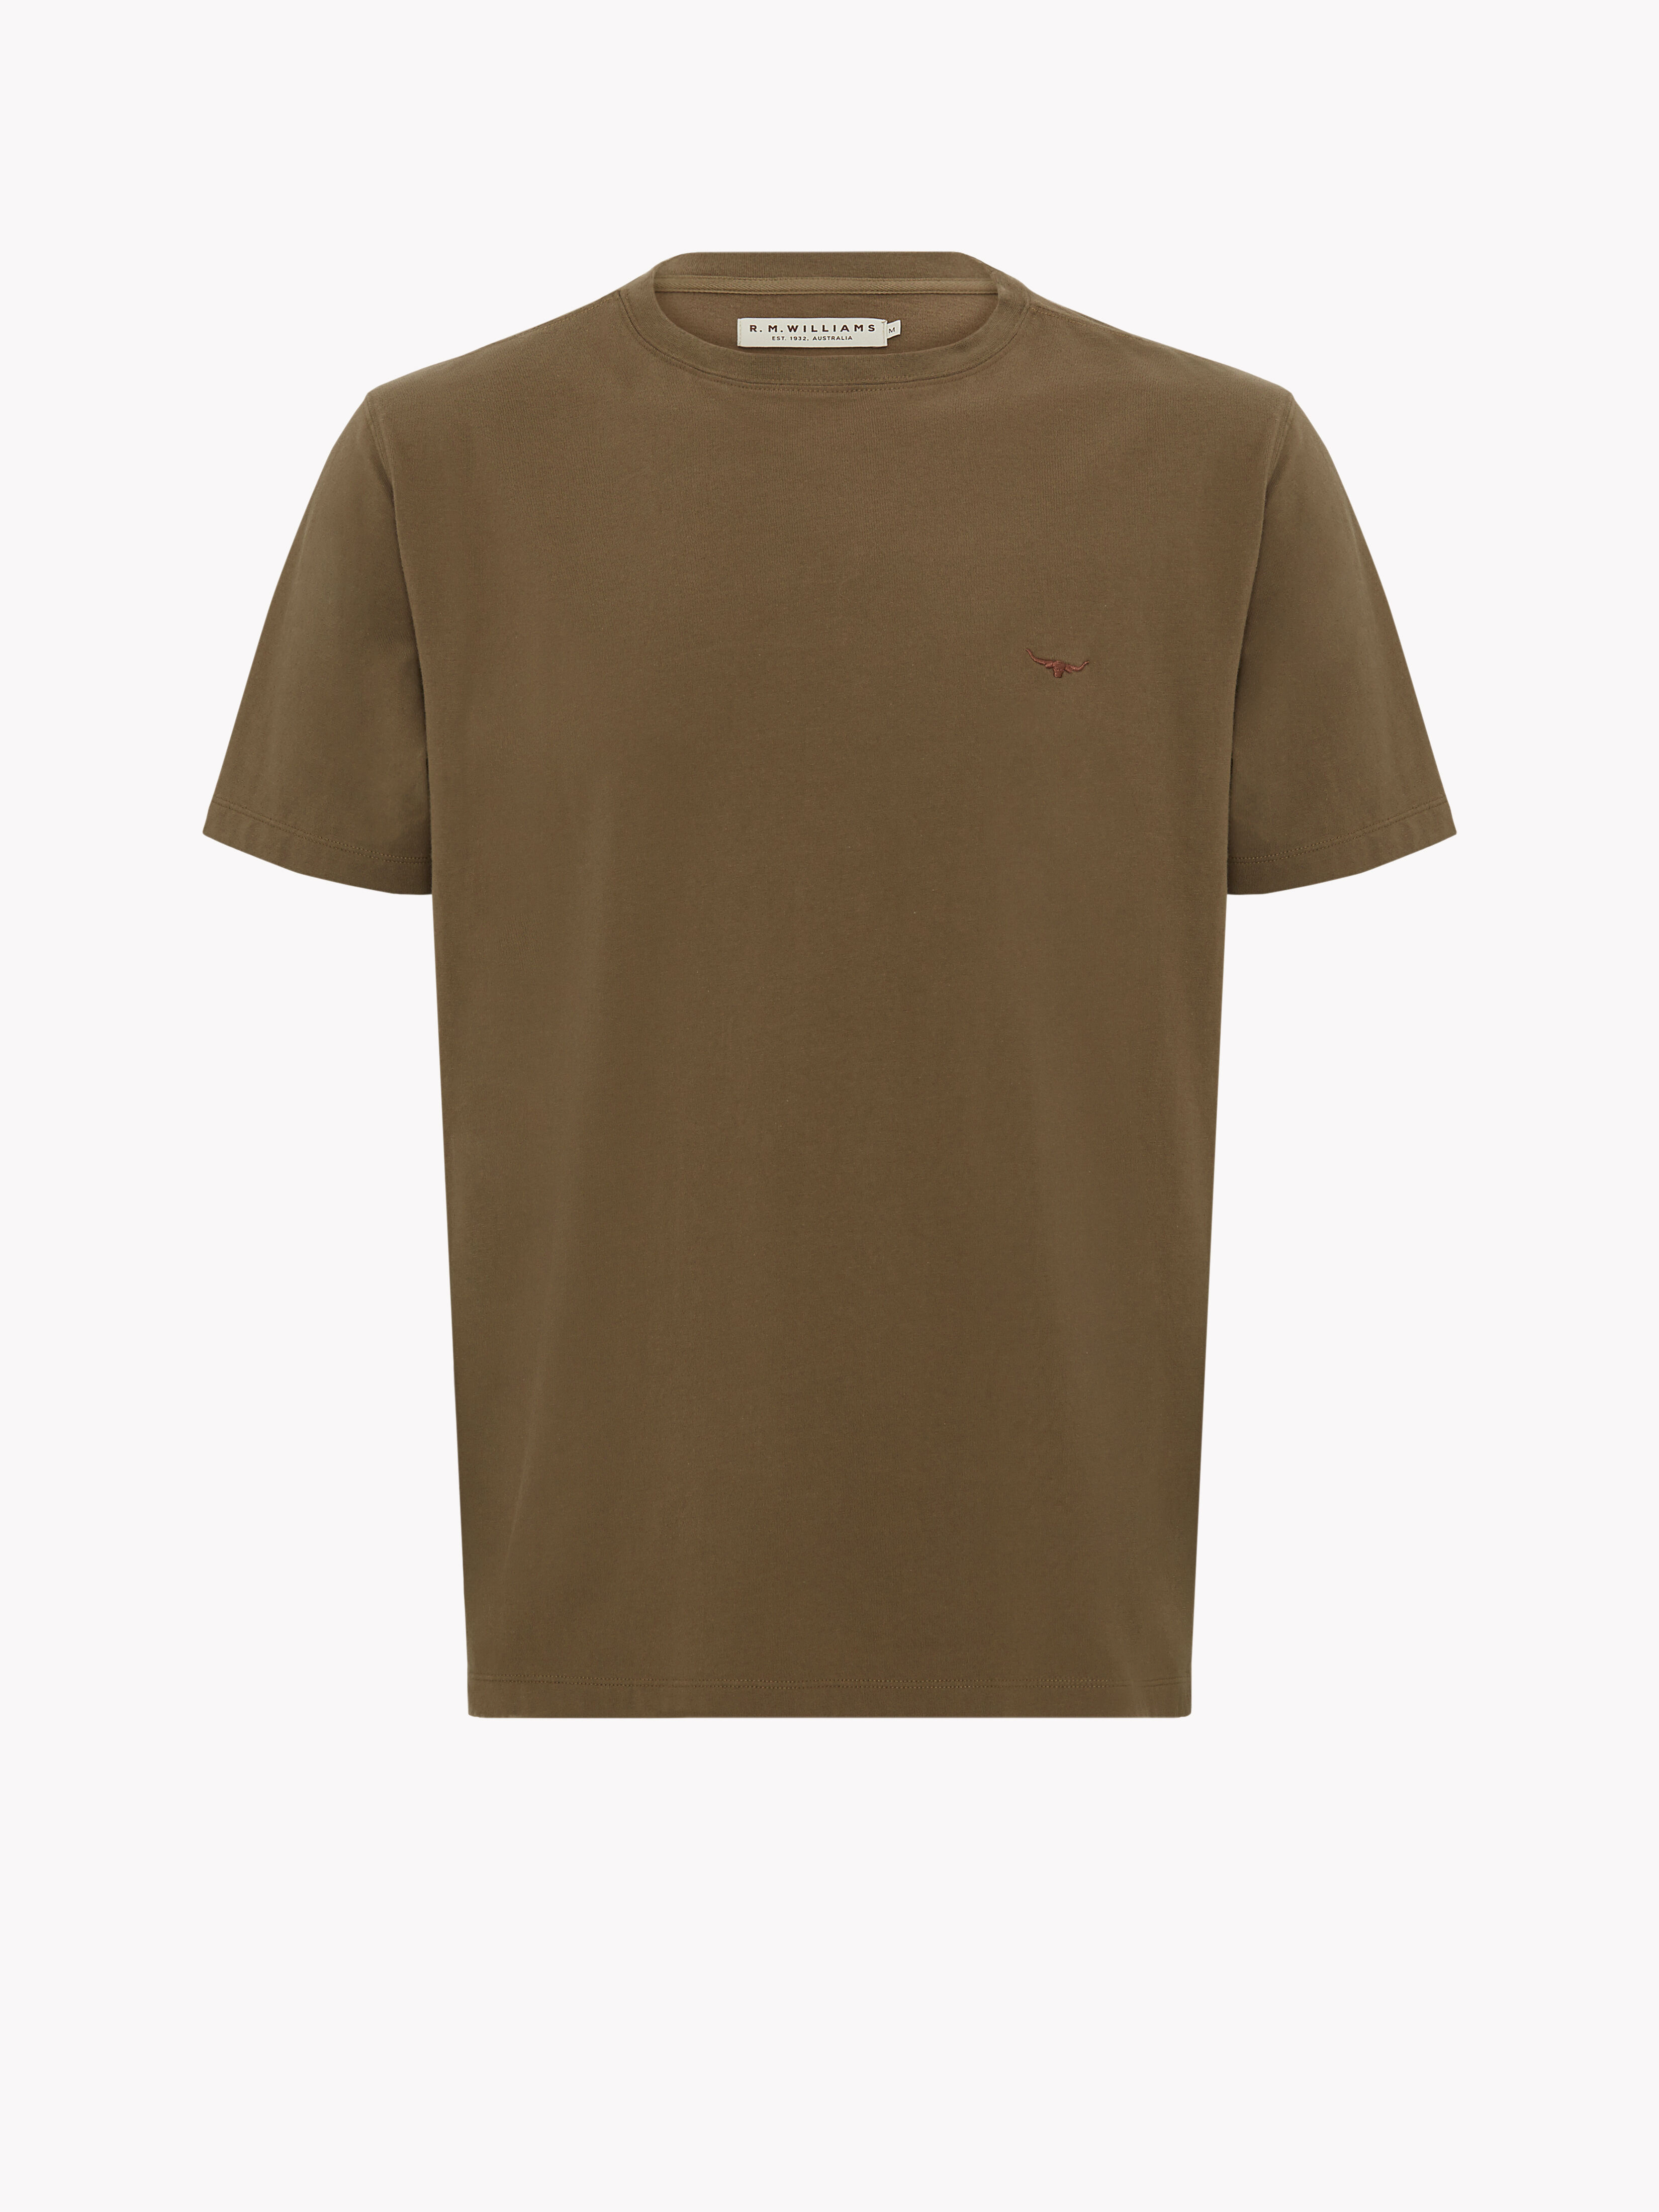 brown tee shirt